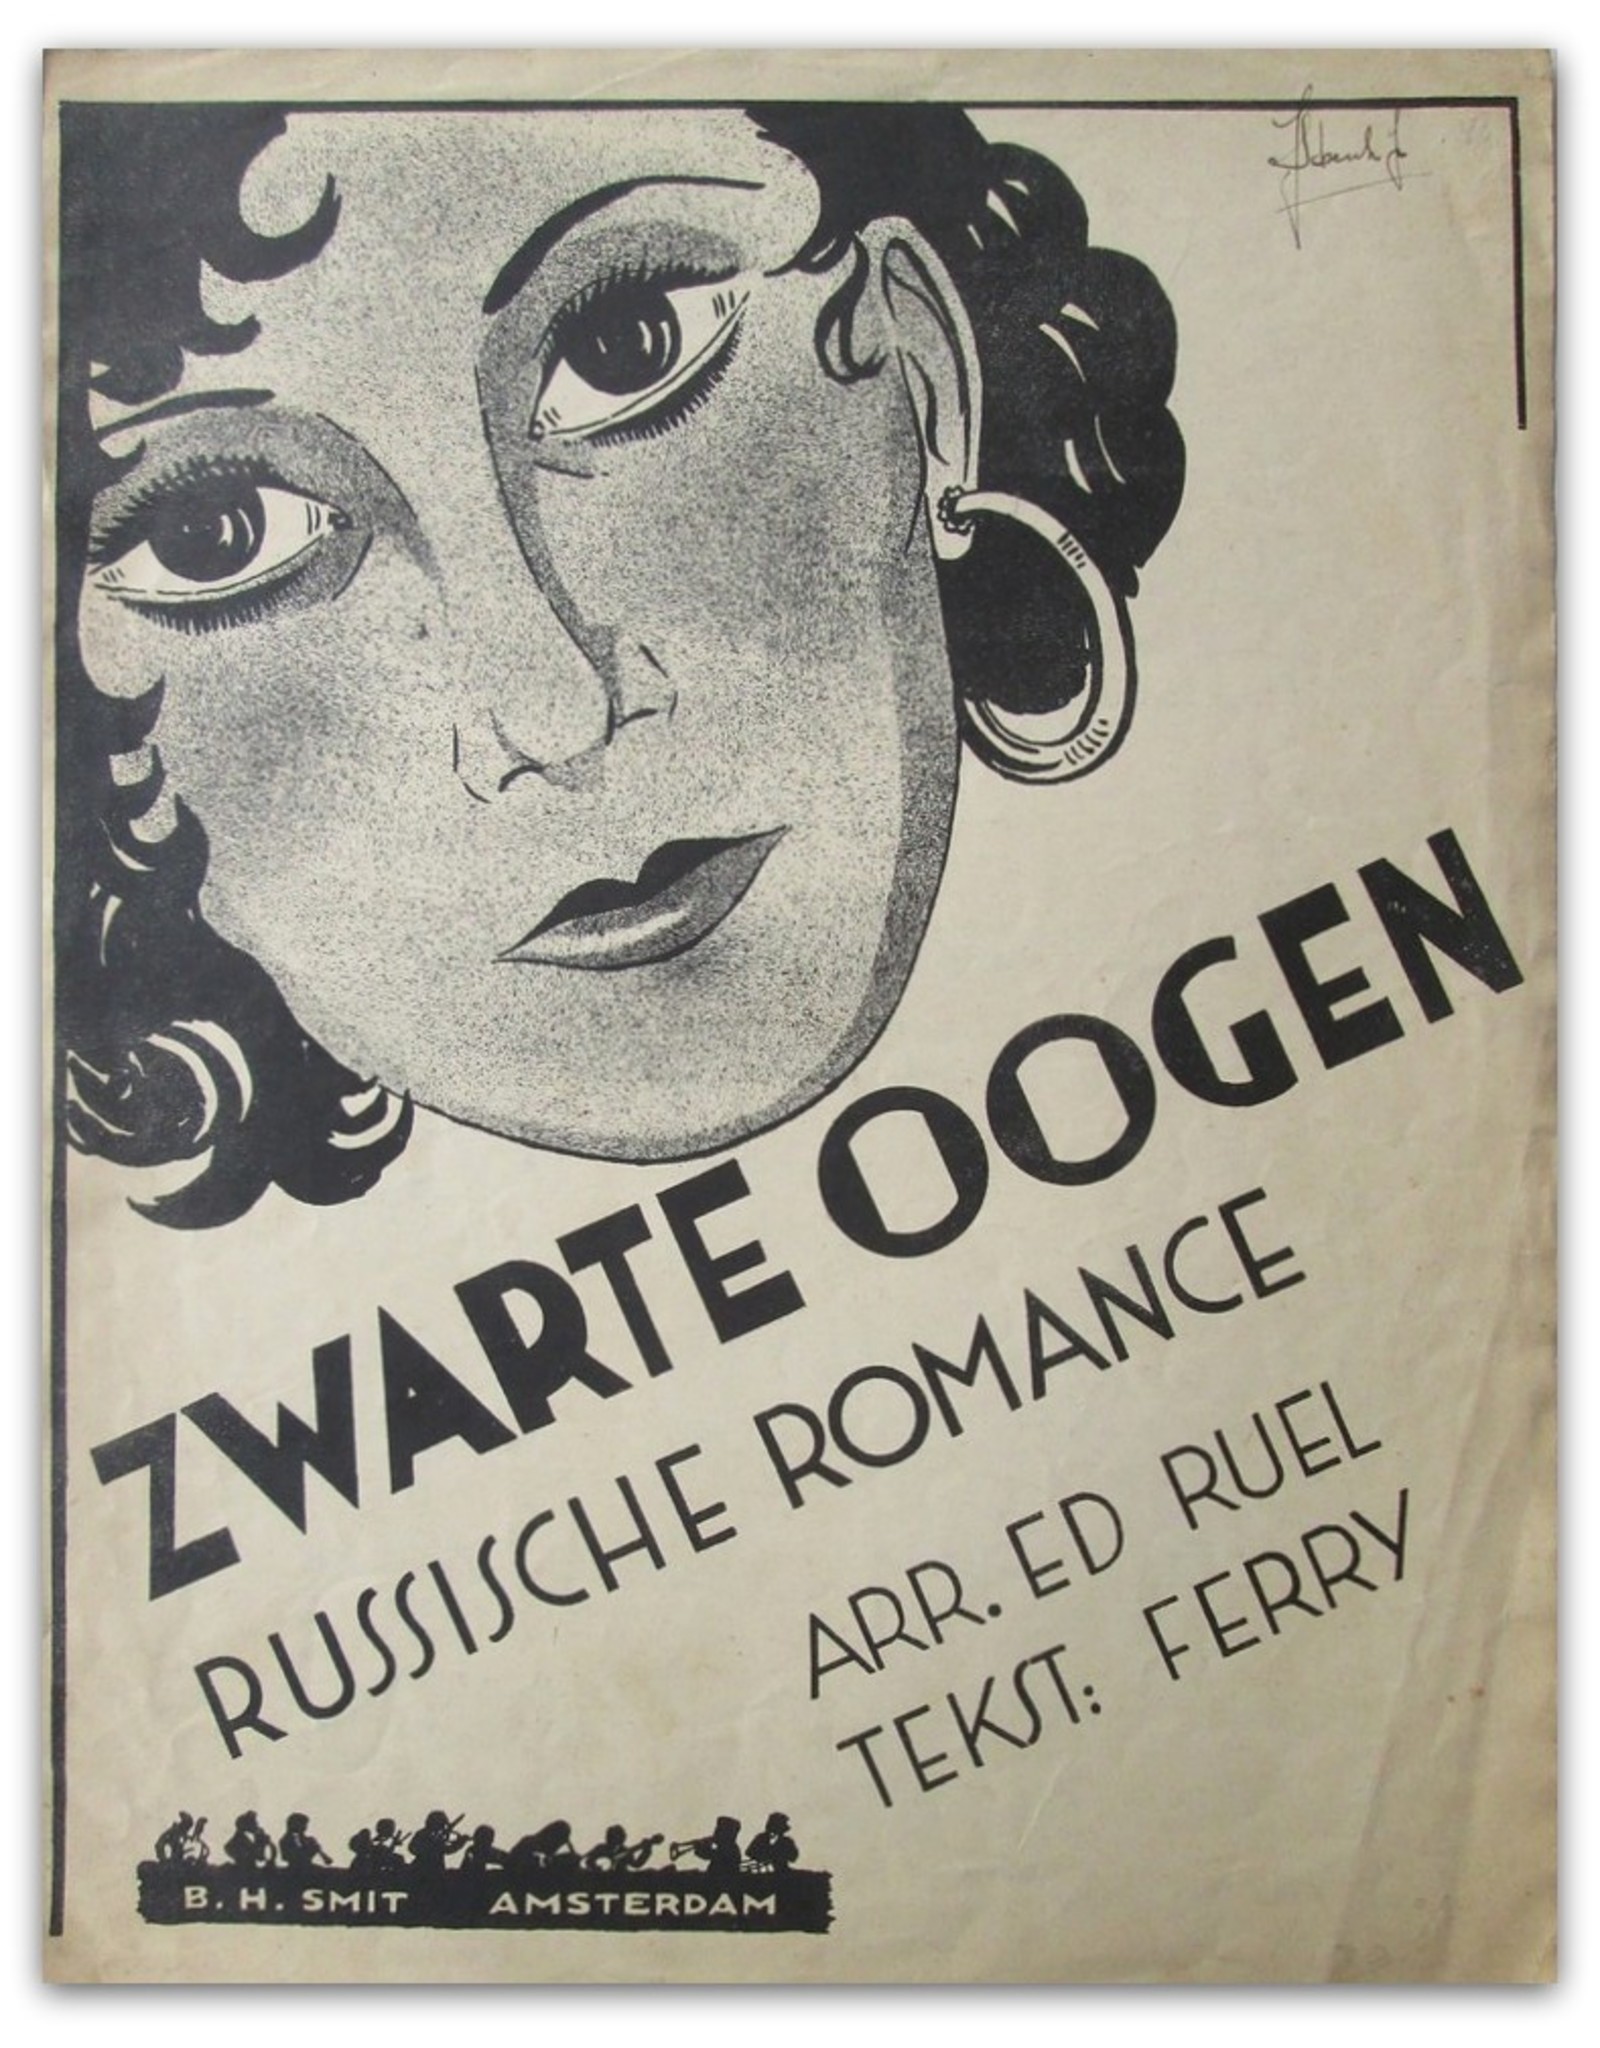 Ed Ruel - Zwarte Oogen. Russische Romance